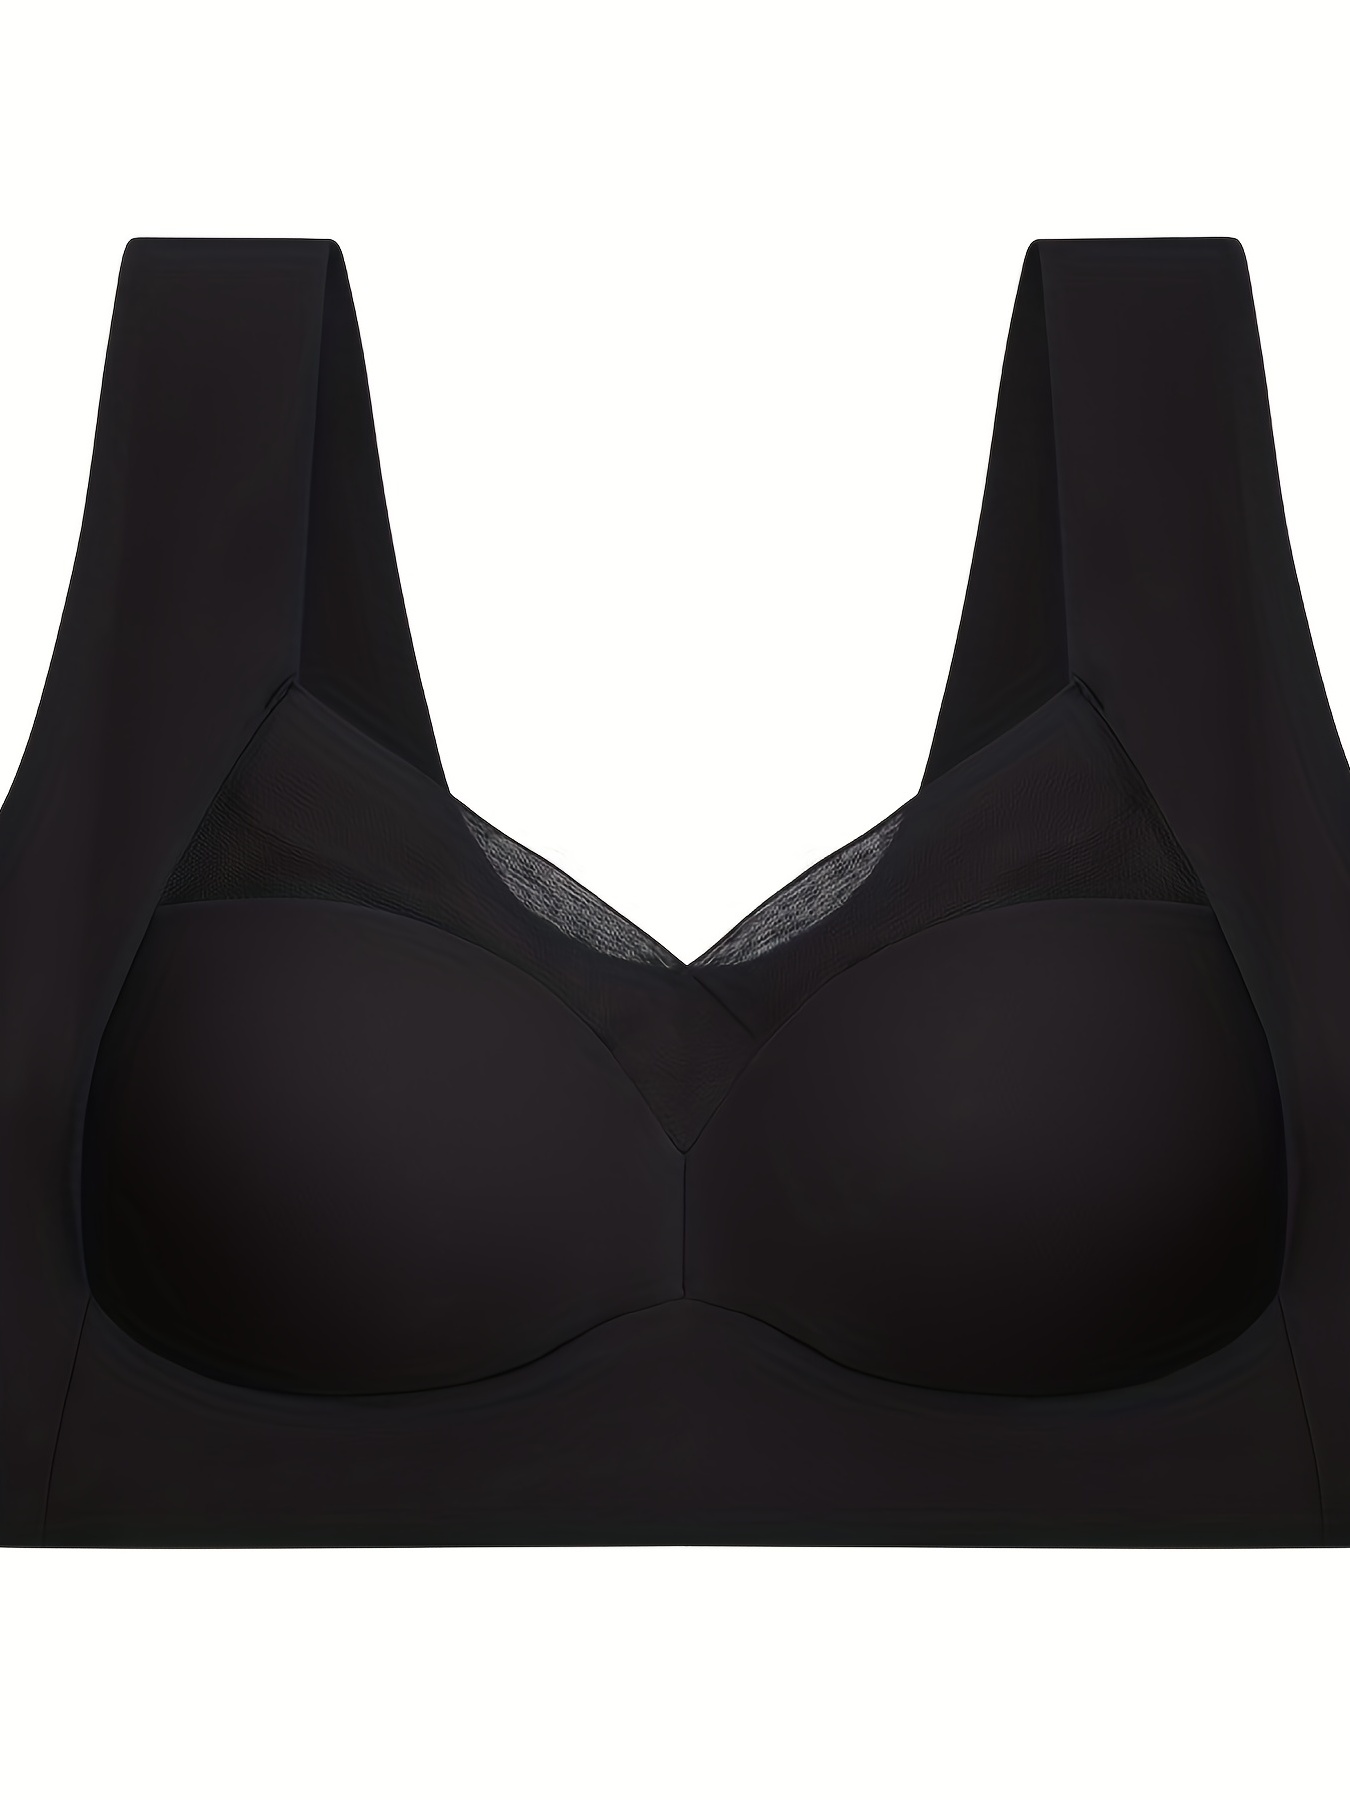 Aayomet Push Up Bras for Women Women's Blissful Benefits Super Soft  Wireless Lightly Lined Comfort Bra,Black L